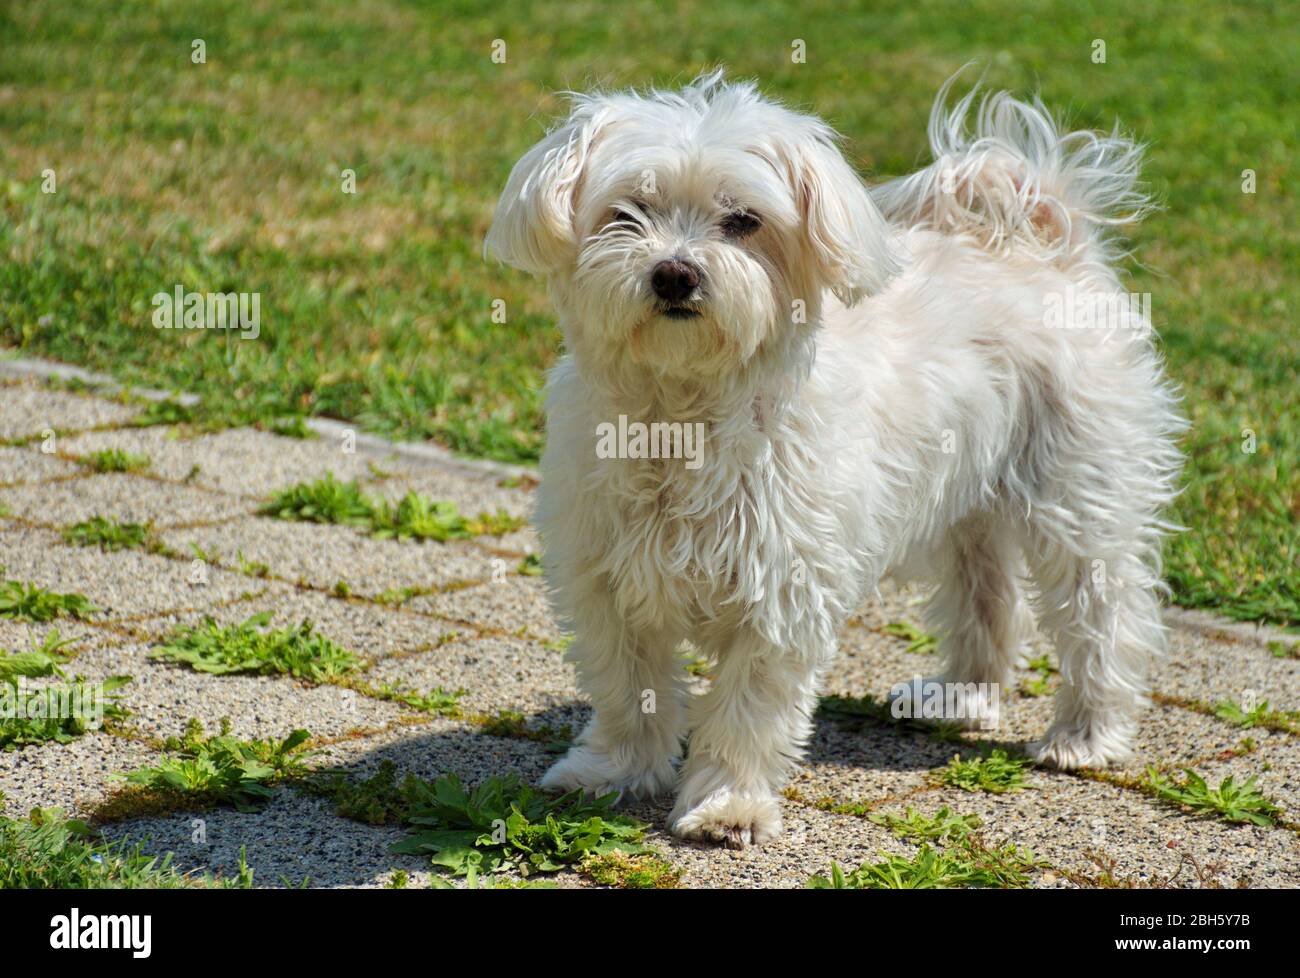 Portrait Of Cute Maltese Dog In The Backyard Stock Photo Alamy